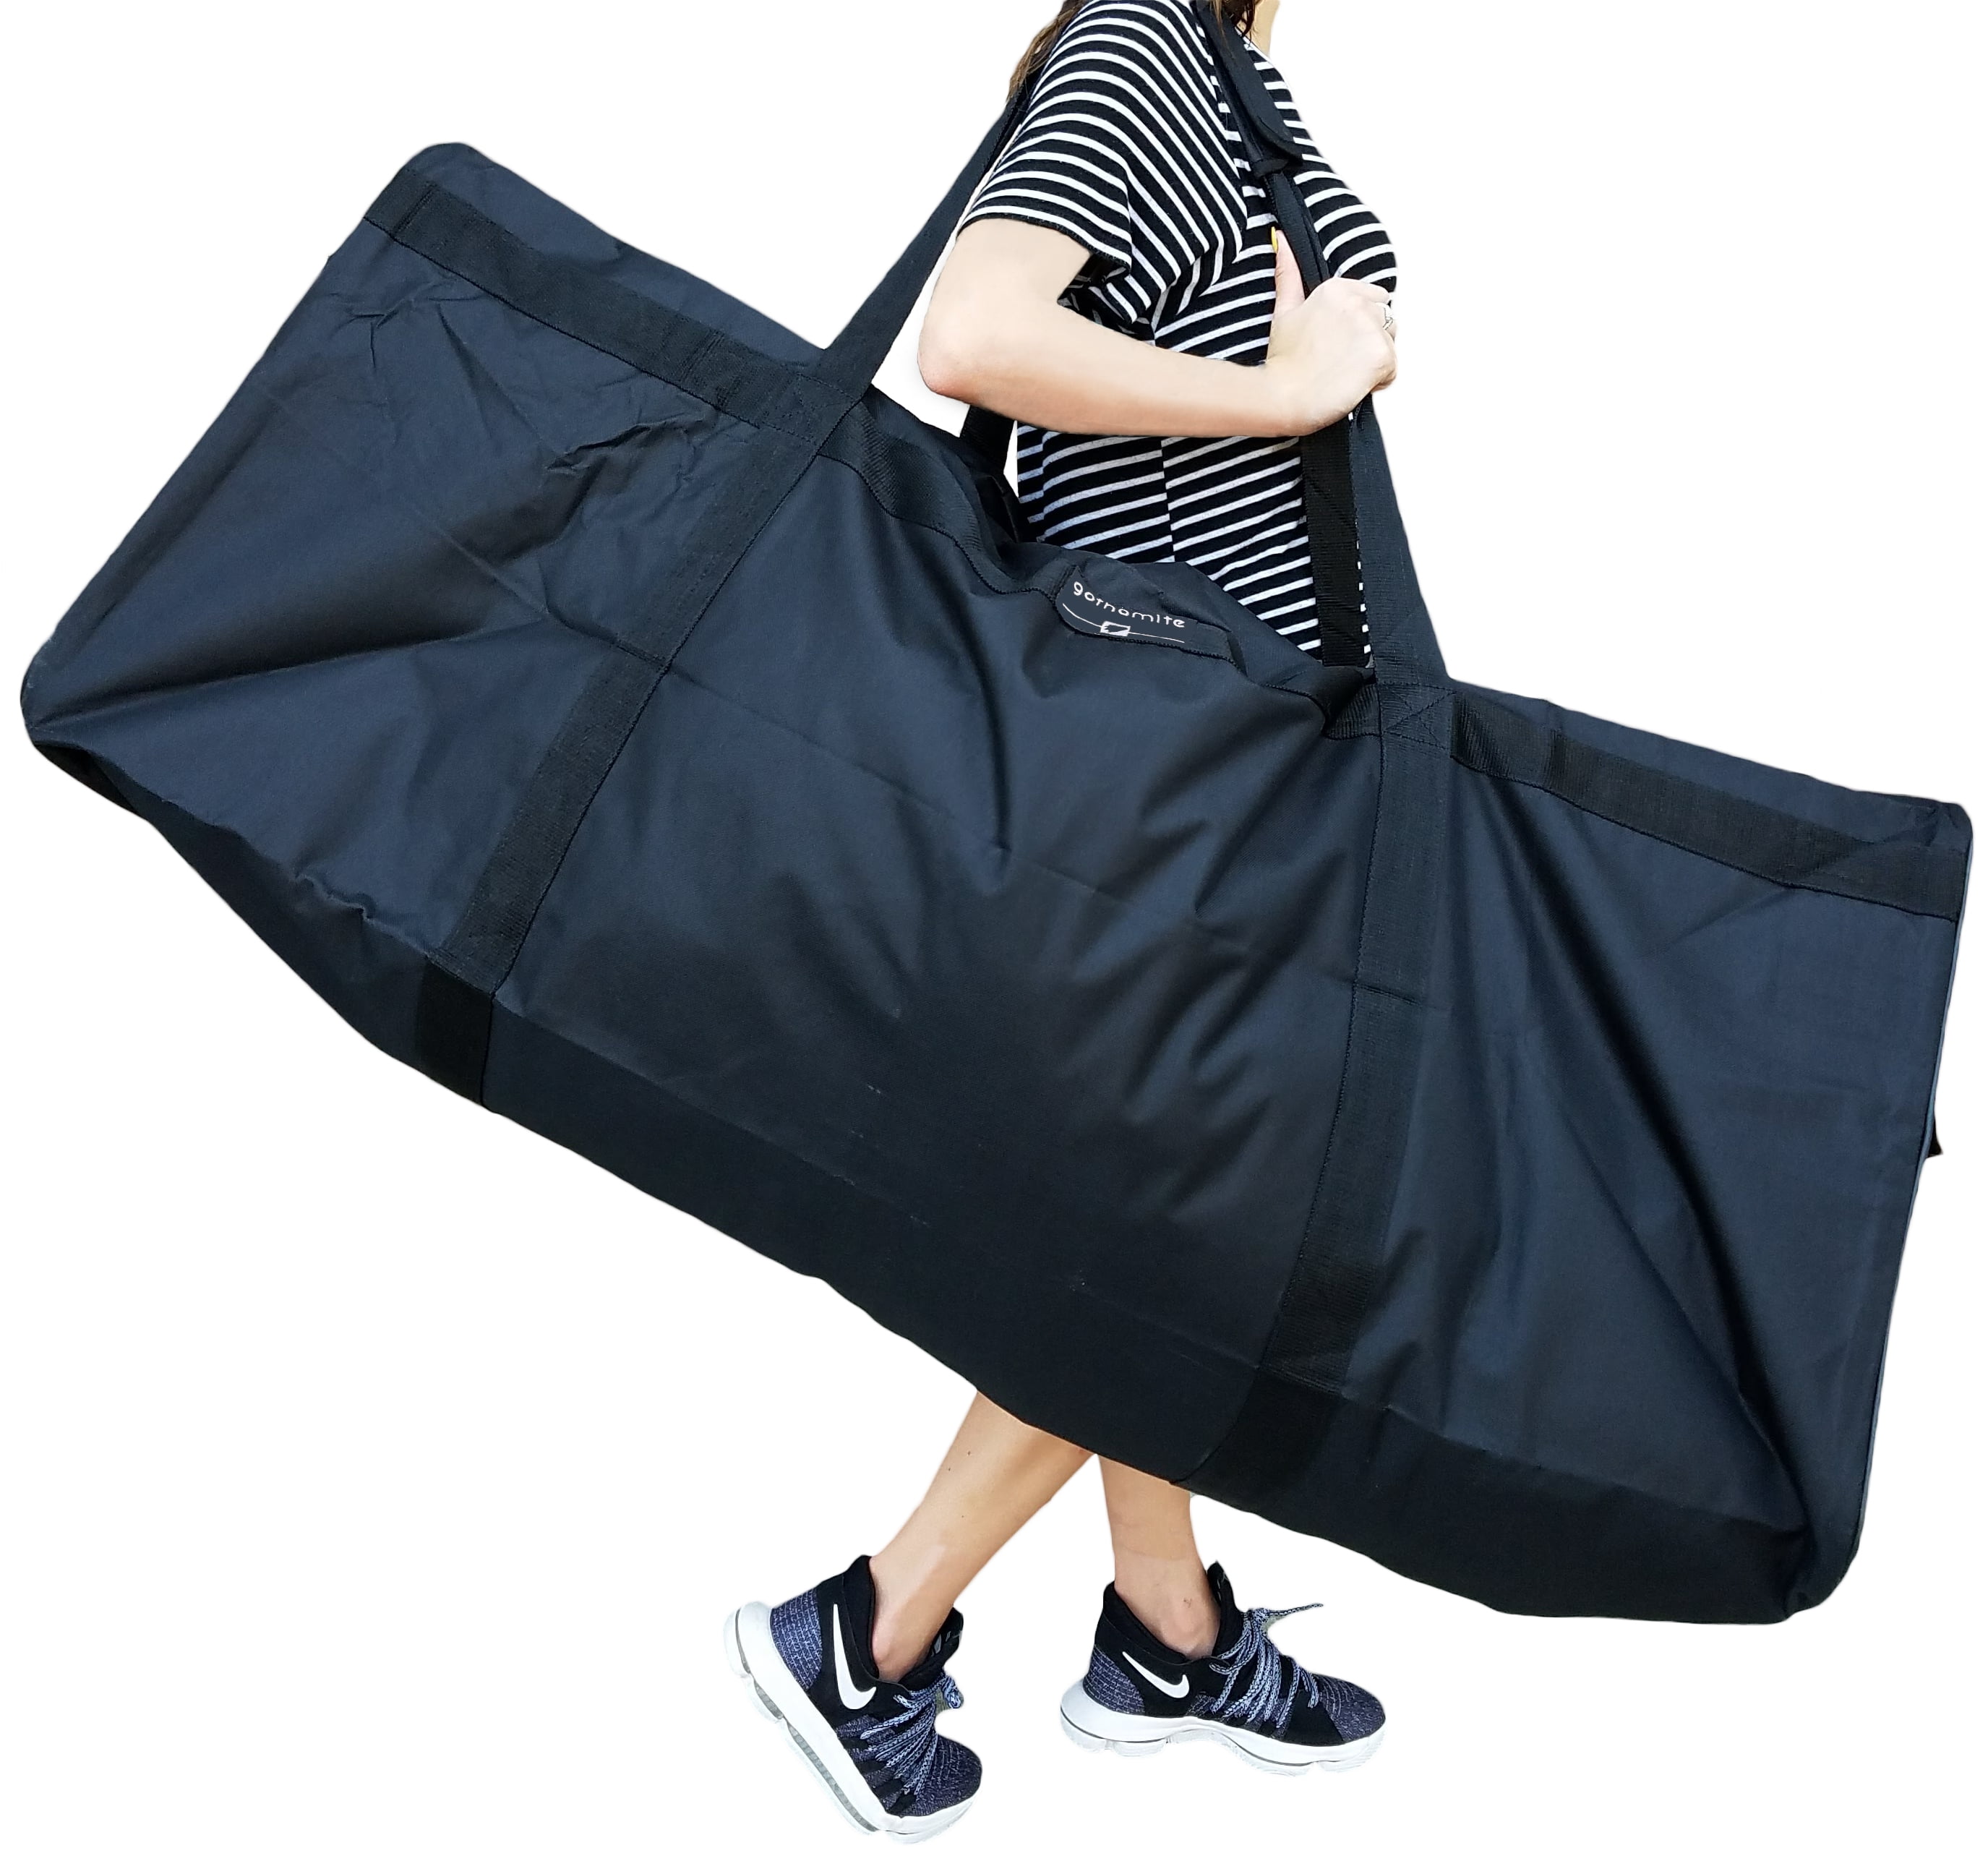 Large Mens Canvas Backpack Shoulder Bag Sports Travel Duffle Bag Luggage Hot New 